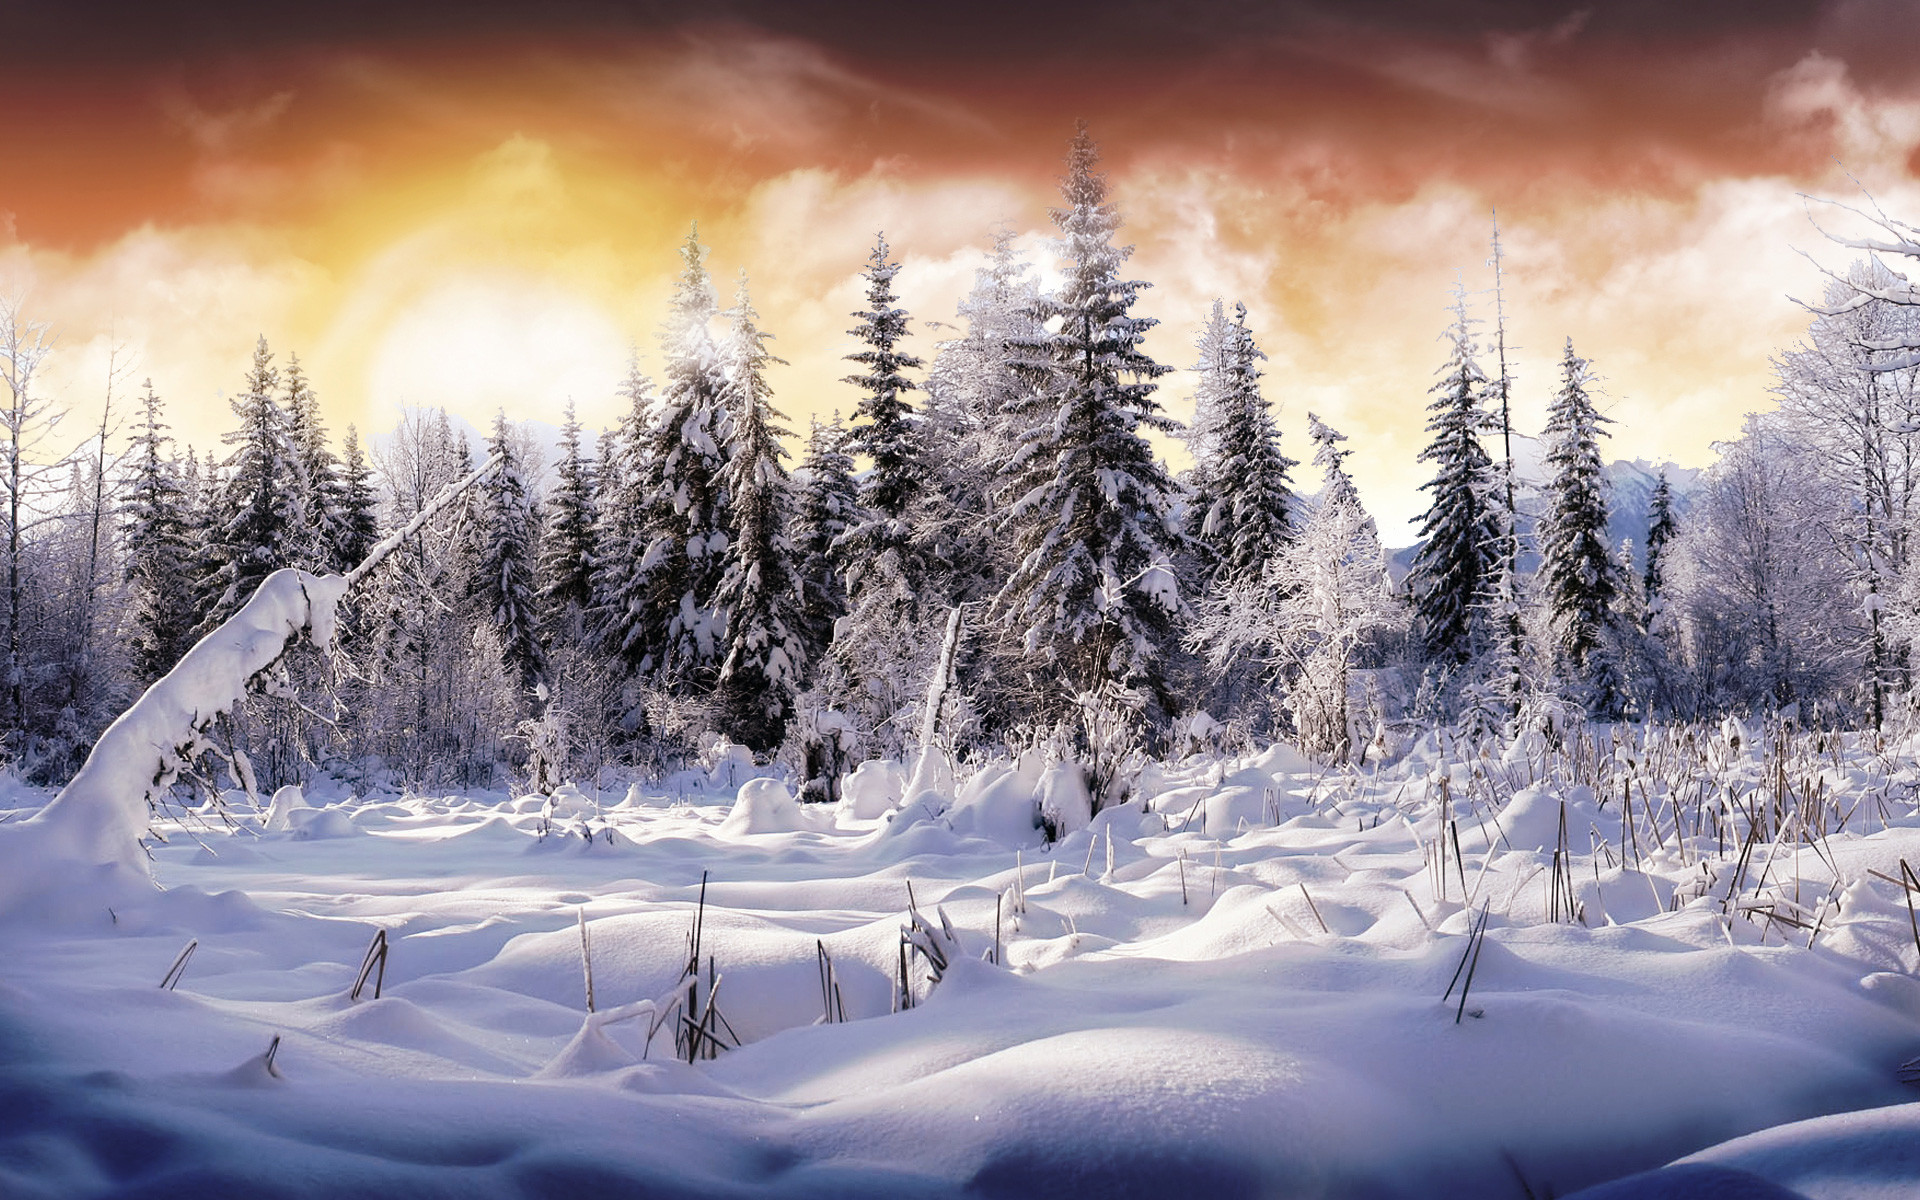 Winter wonderland hd wallpaper free for desktop